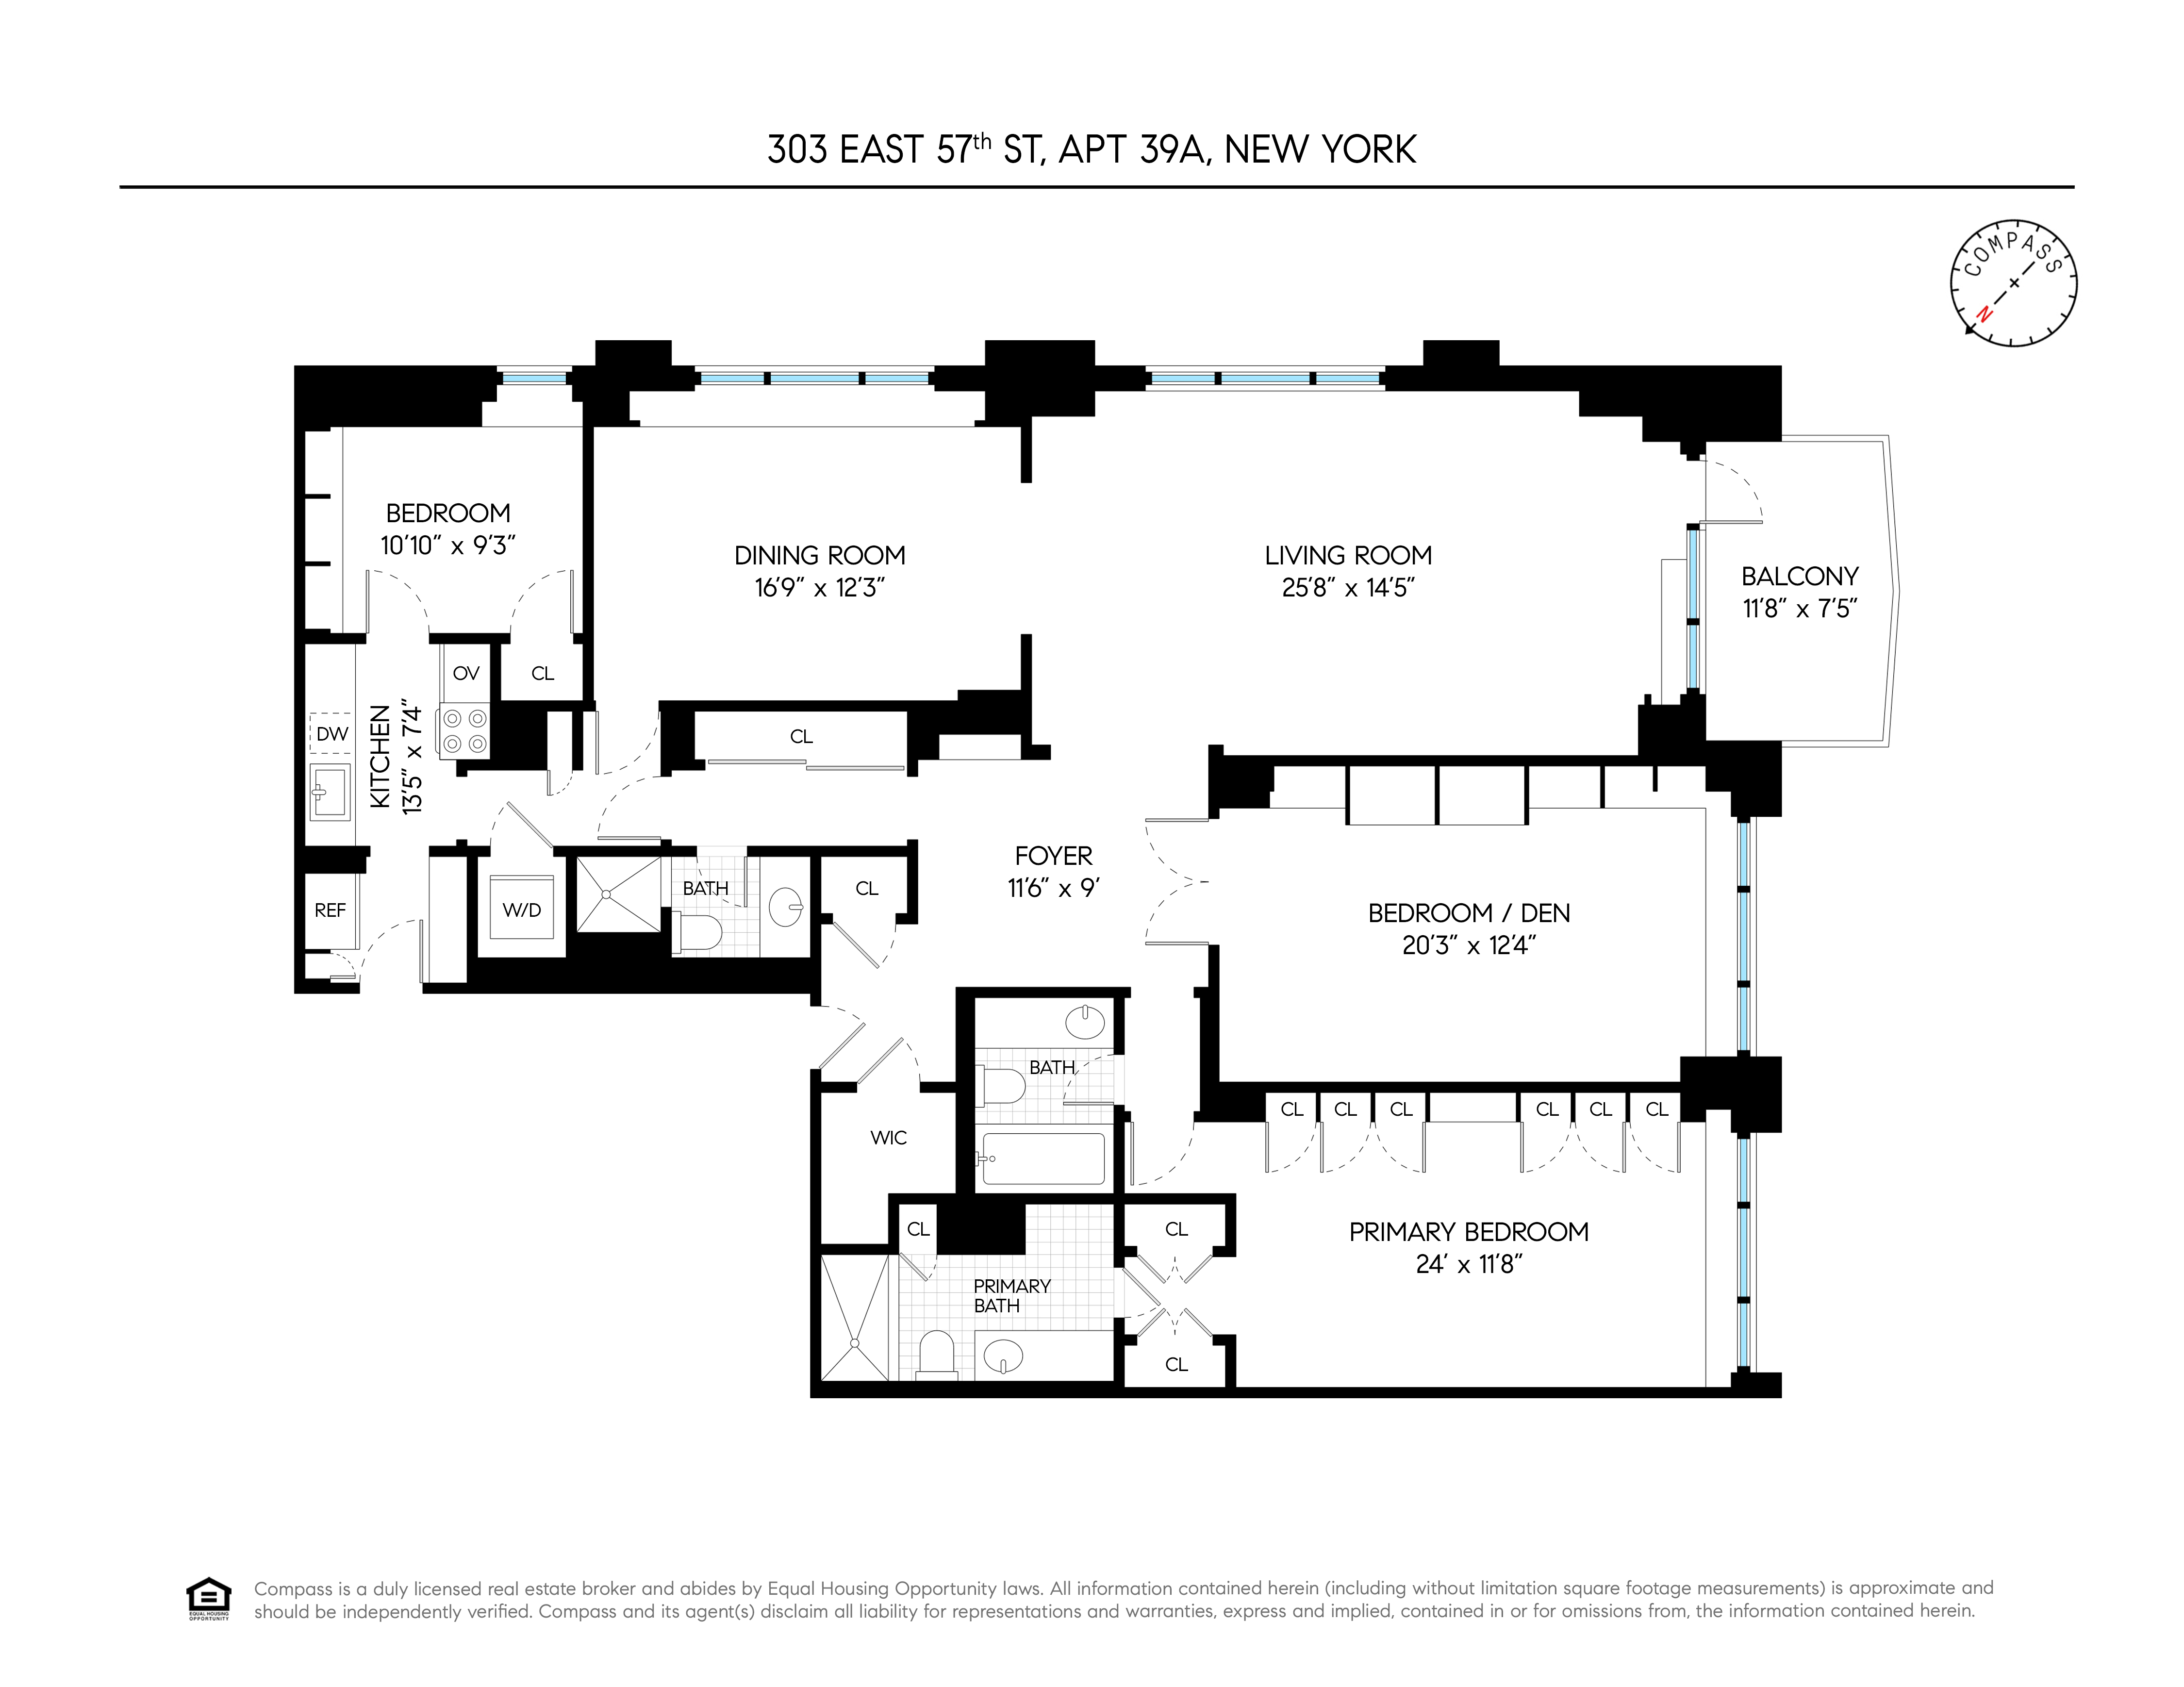 Floorplan for 303 East 57th Street, 39A